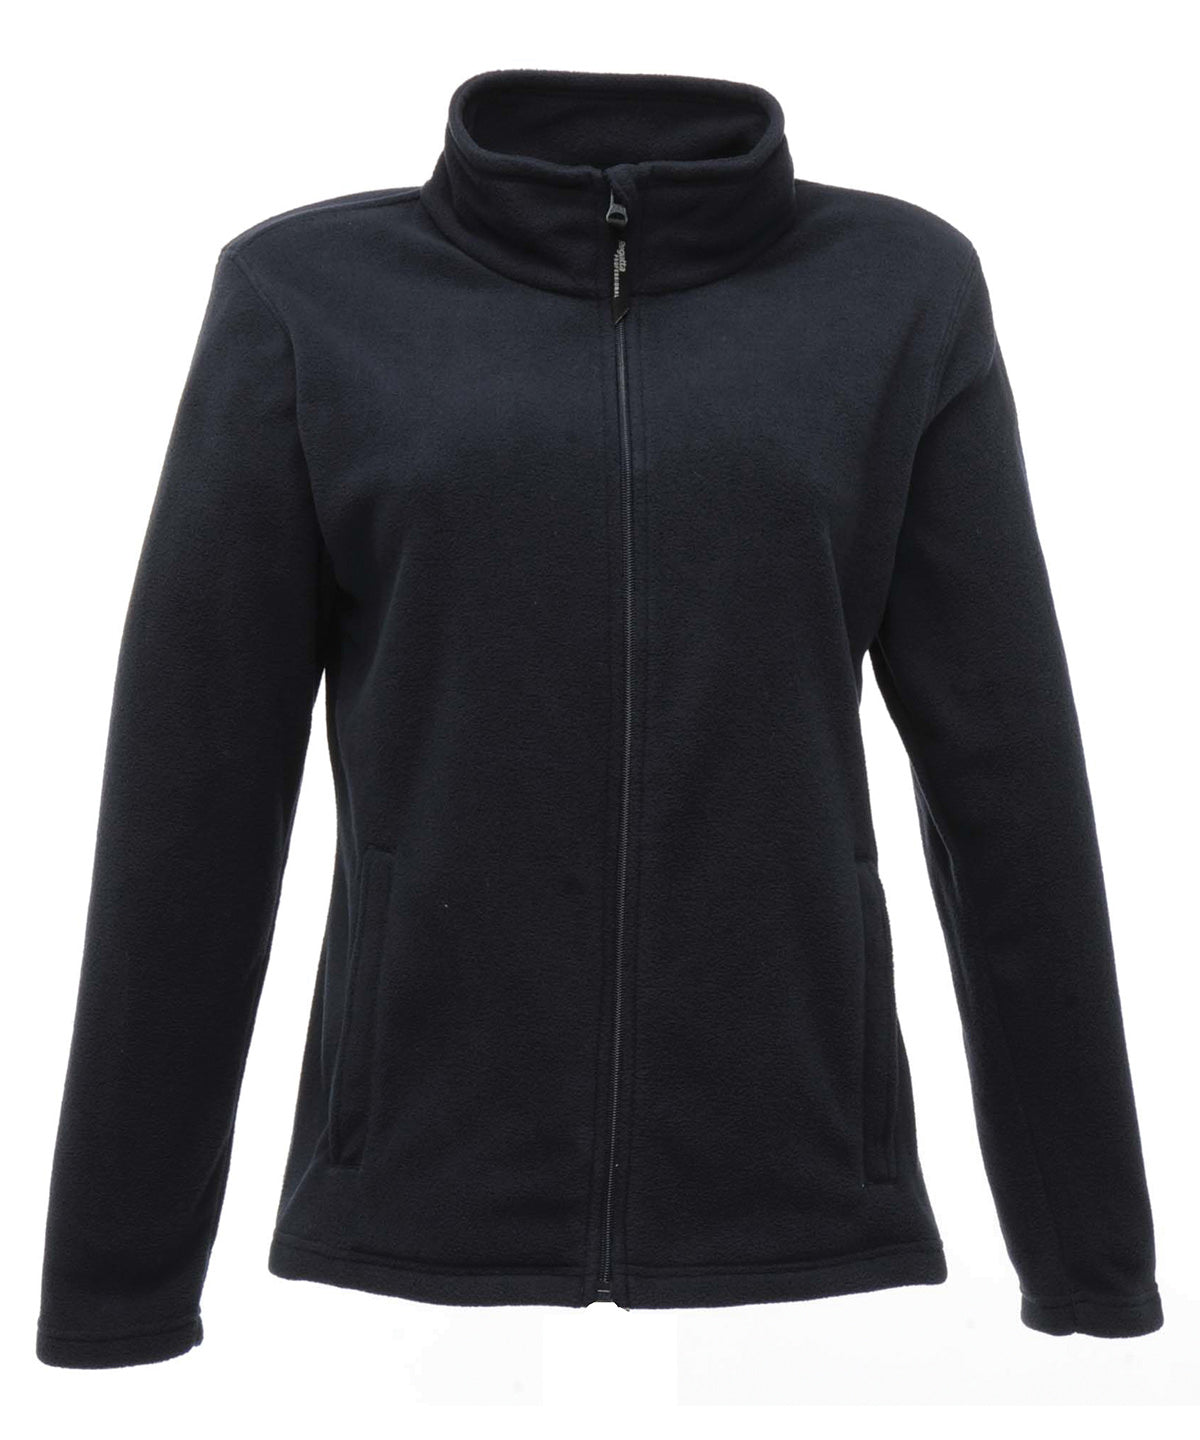 Personalised Jackets - Black Regatta Professional Women's full-zip microfleece